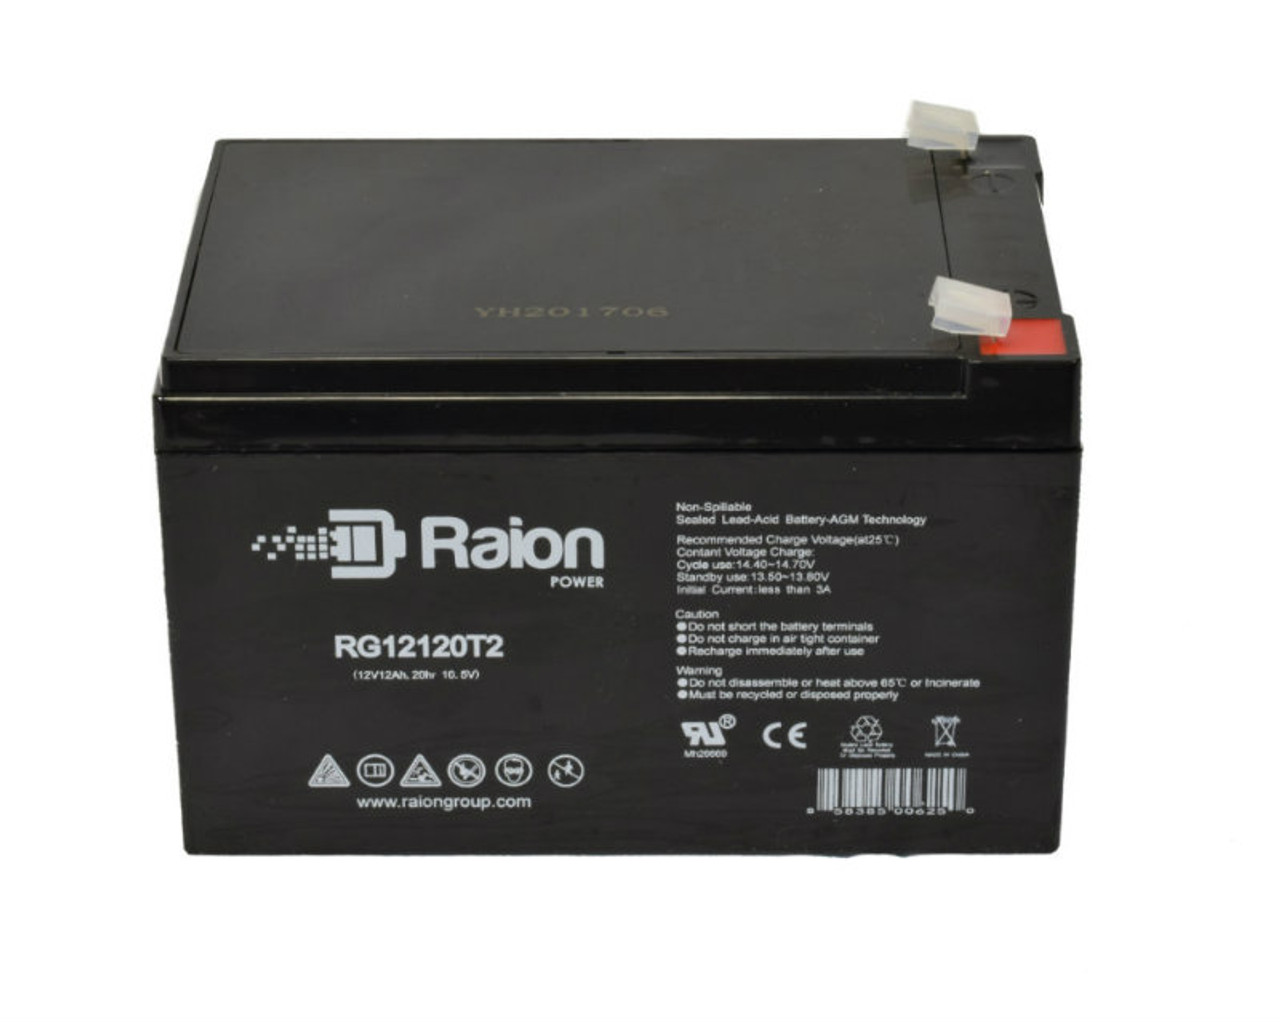 Raion Power RG12120T2 SLA Battery for National Battery C21A